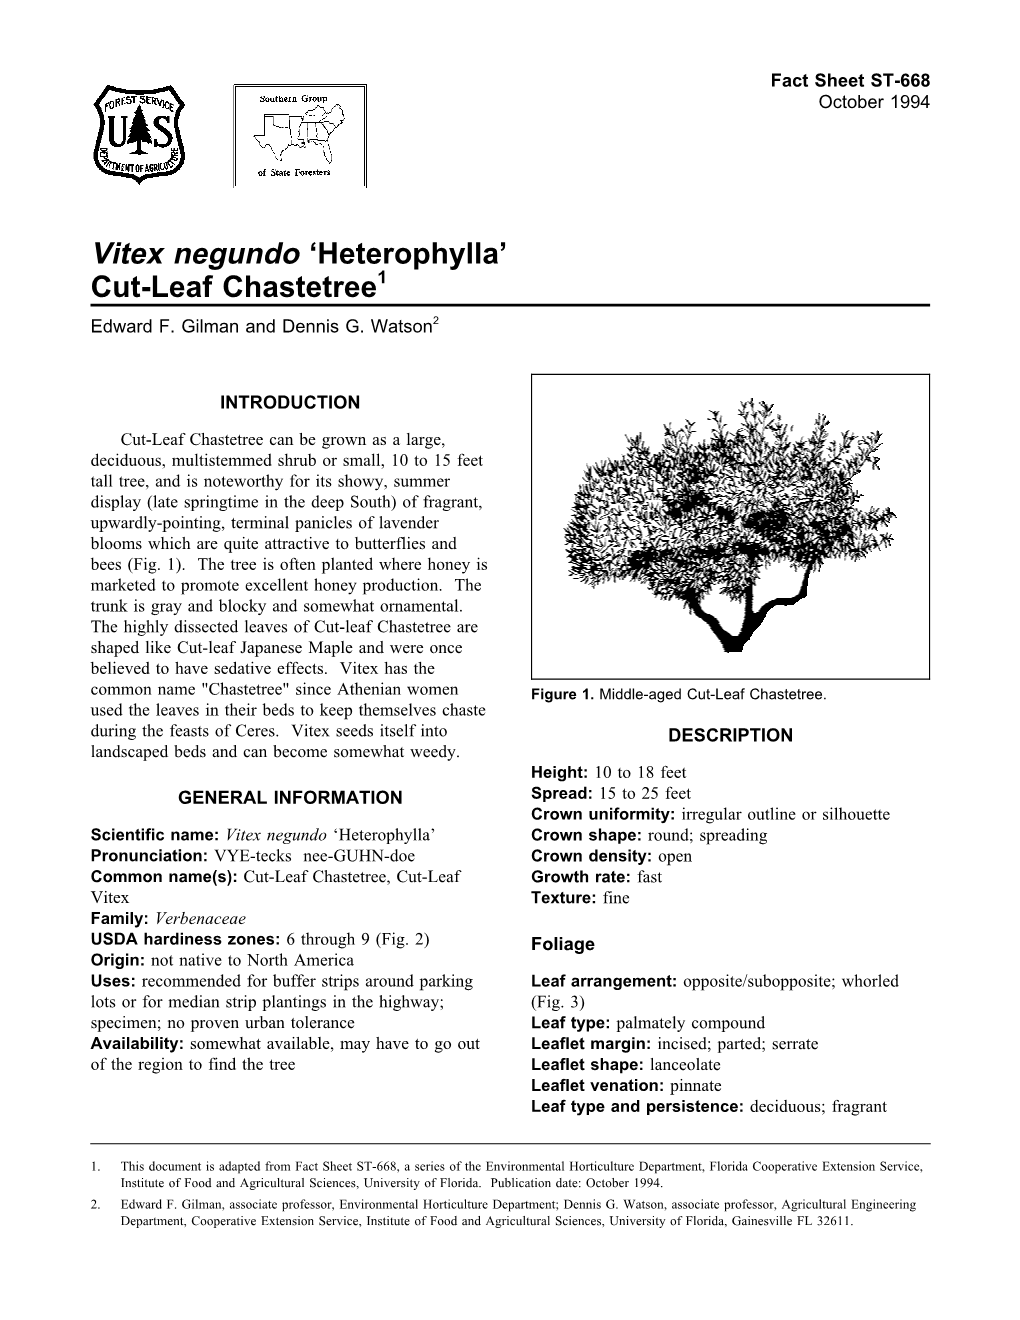 Vitex Negundo 'Heterophylla' Cut-Leaf Chastetree